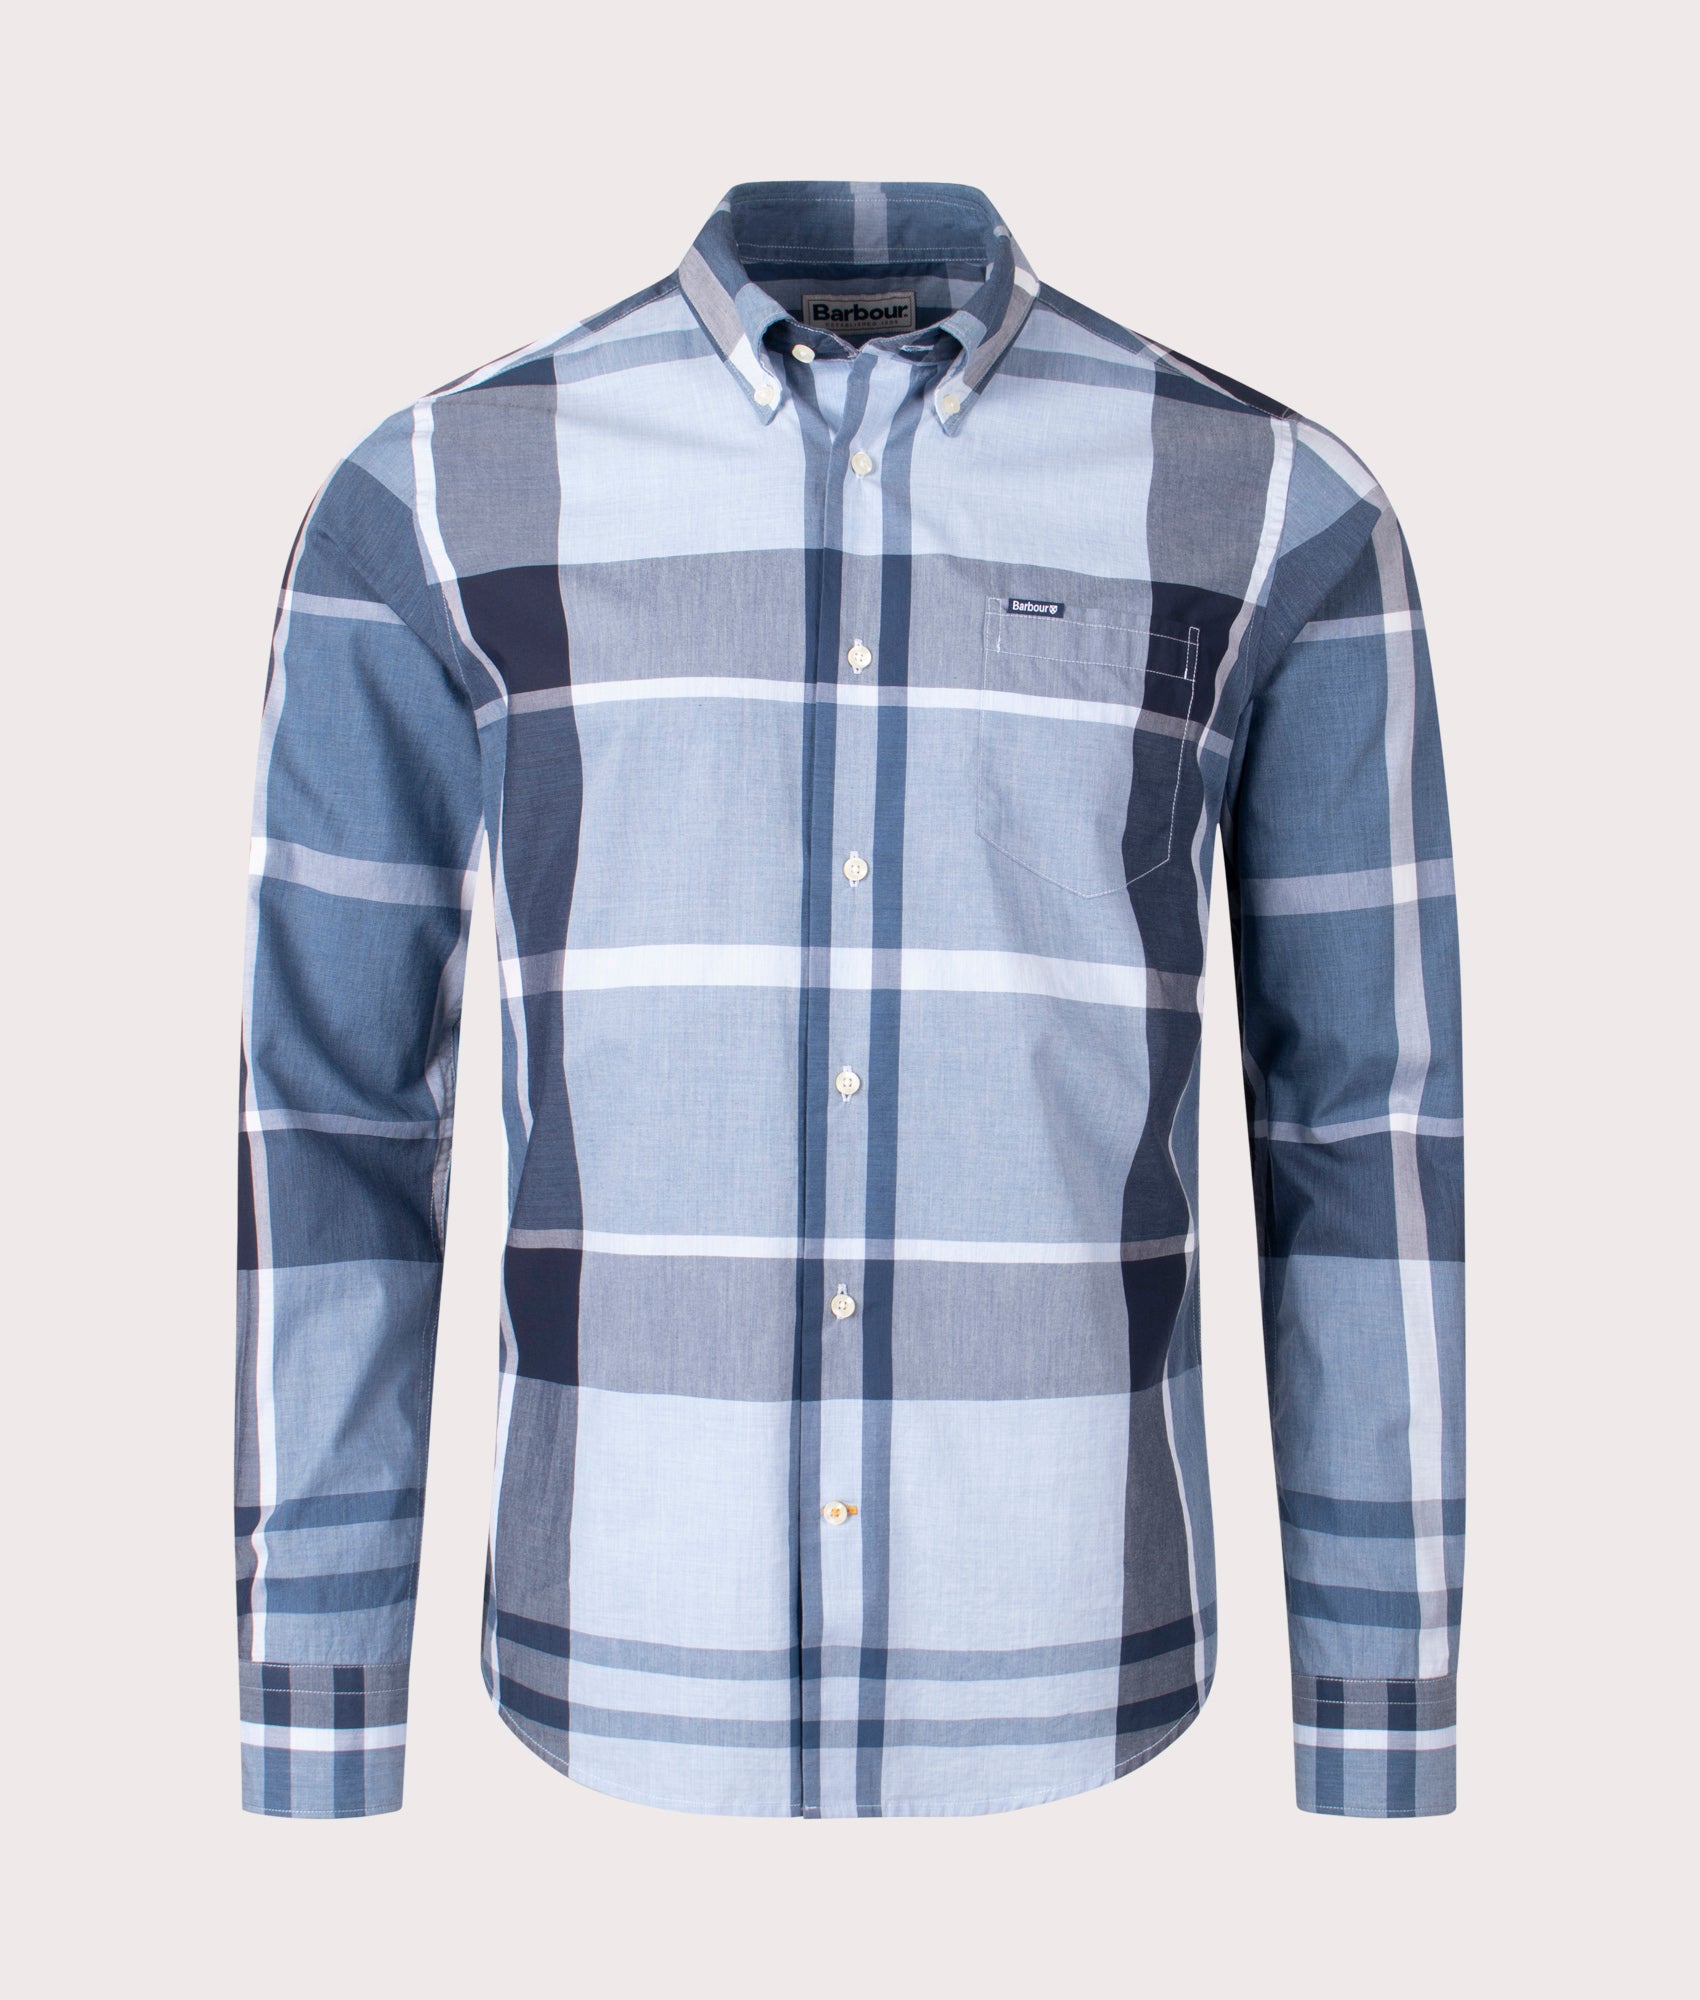 Barbour Lifestyle Mens Harris Shirt Tailored Shirt - Colour: TN22 Berwick Blue Tartan - Size: Large